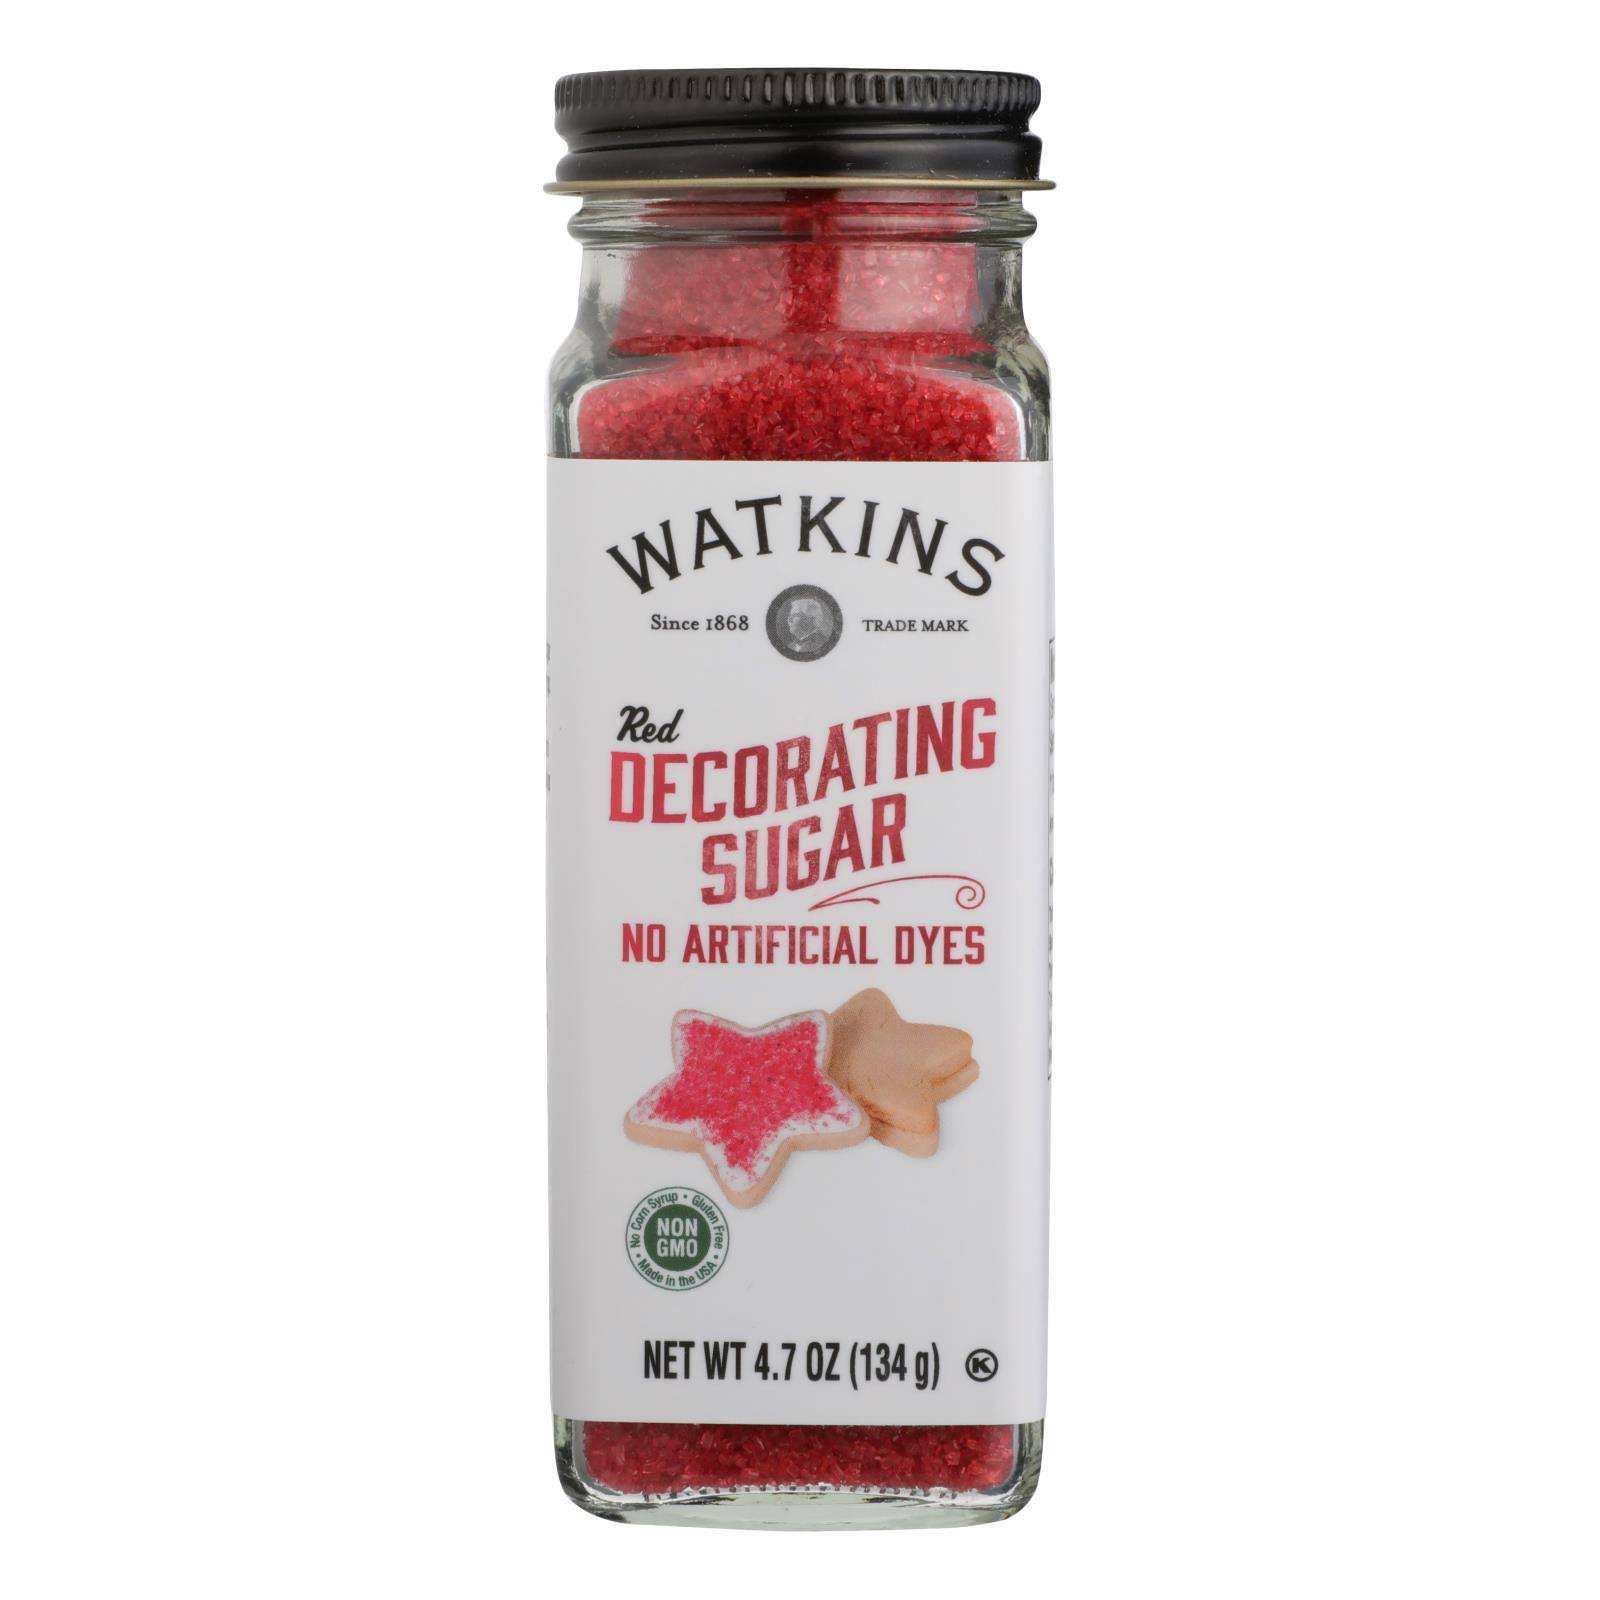 Watkins Decorating Sugar, Red - 4.7 oz